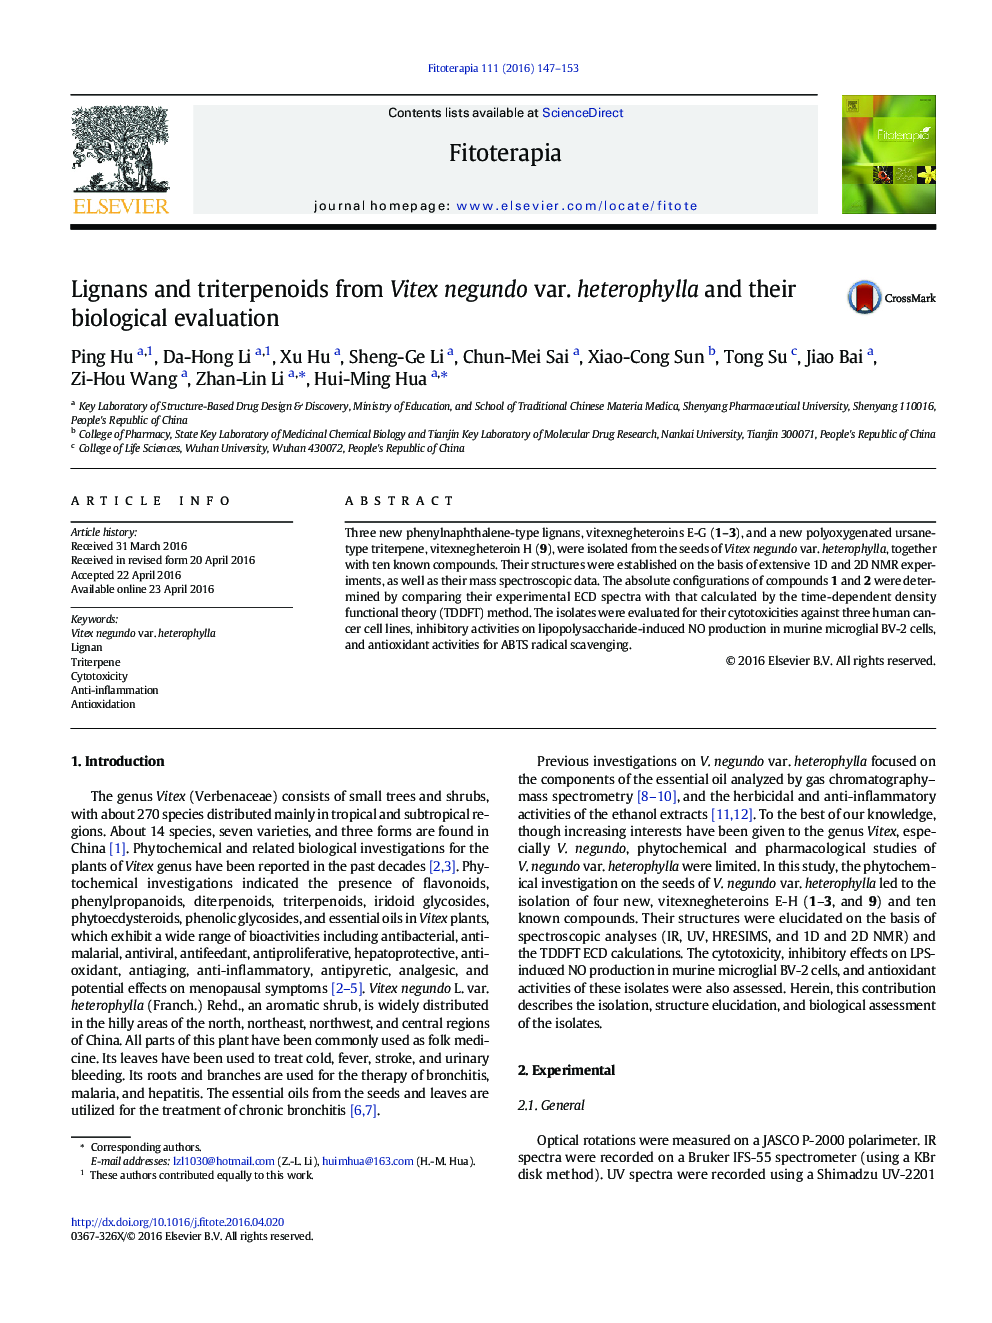 Lignans and triterpenoids from Vitex negundo var. heterophylla and their biological evaluation